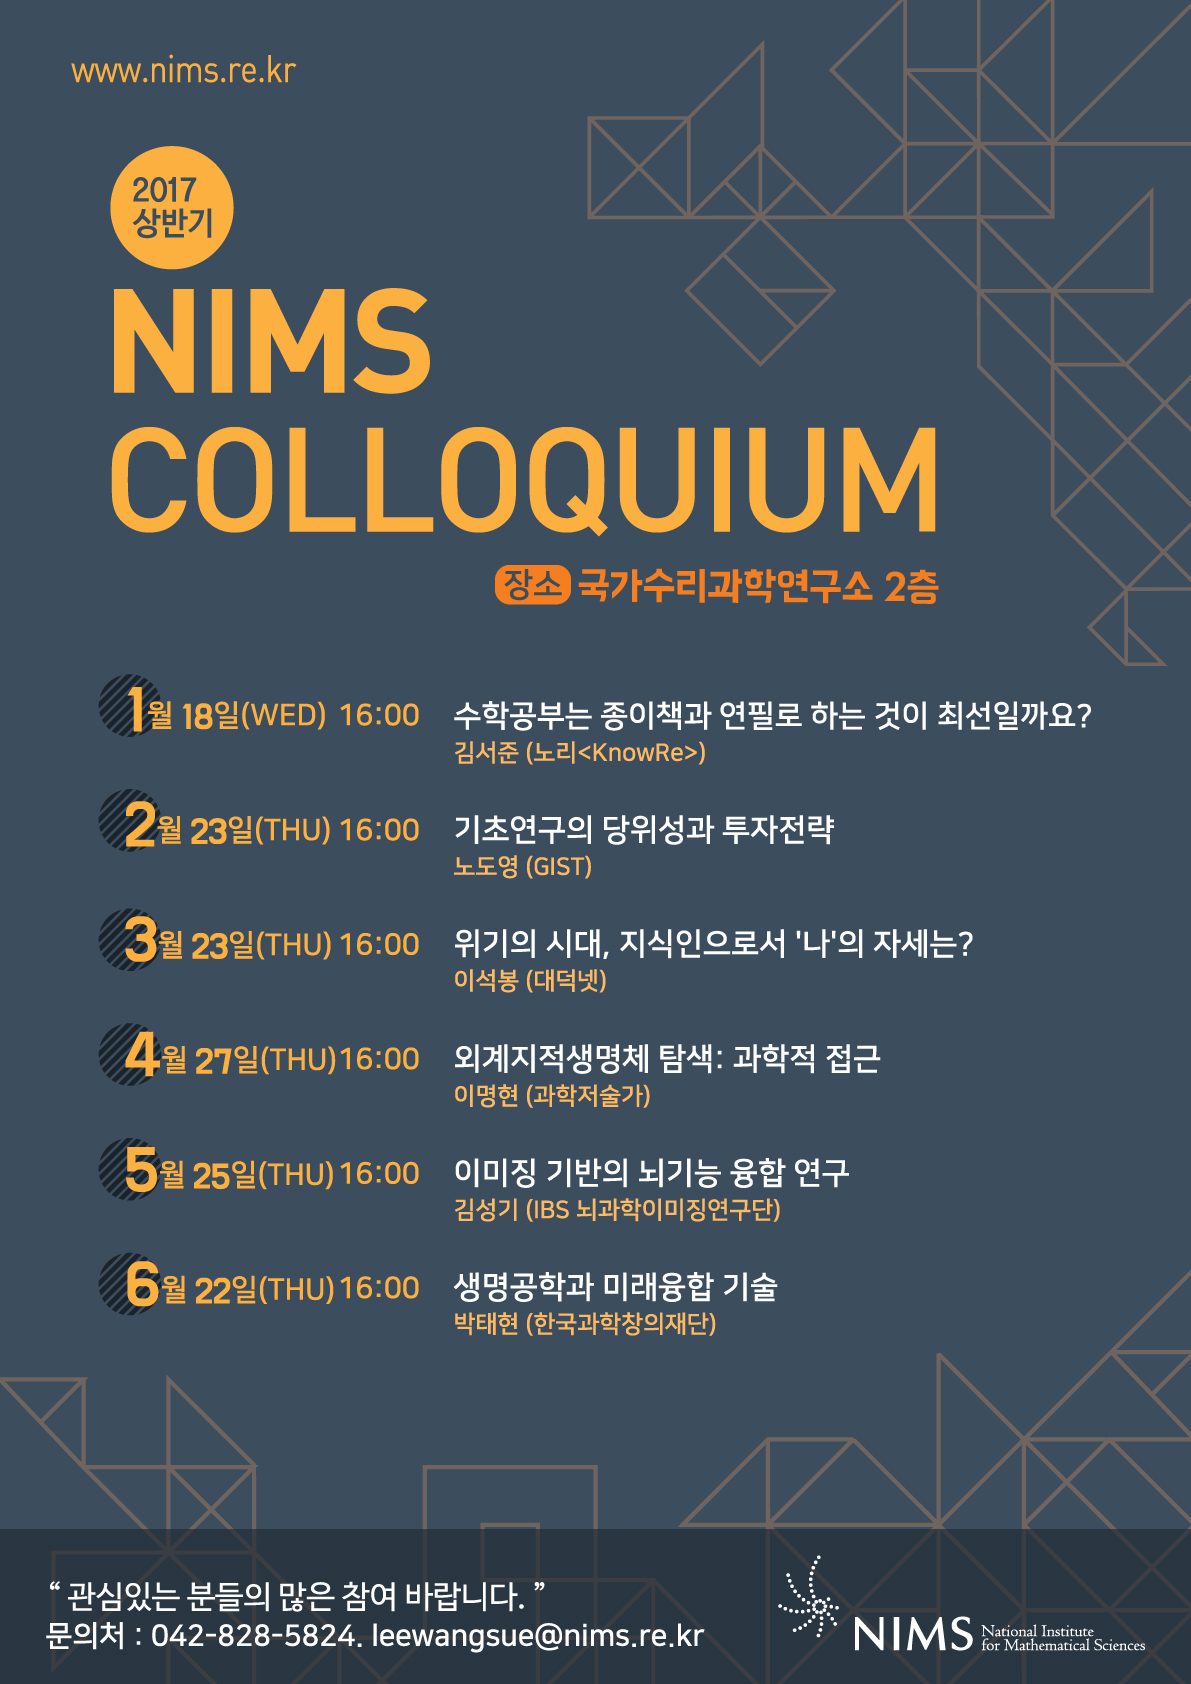 NIMS Colloquium 기초연구의 당위성과 투자전략. 자세한 내용은 본문 참조